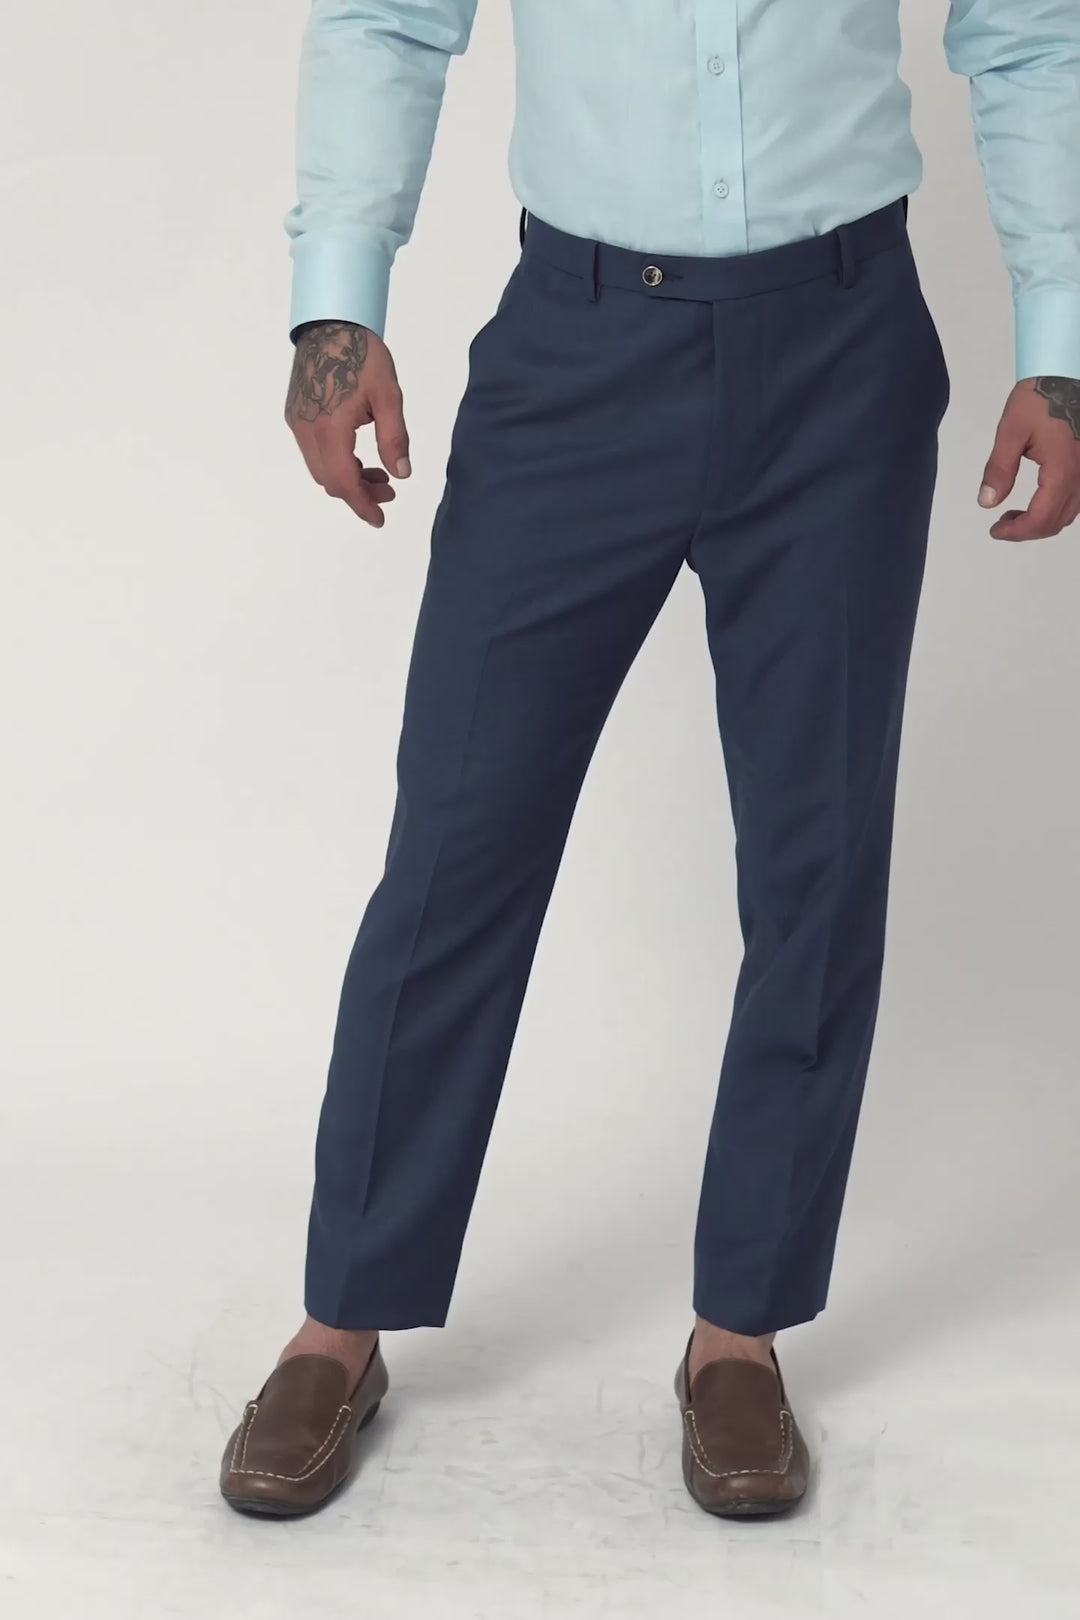 Yale Blue Crosshatch Pants